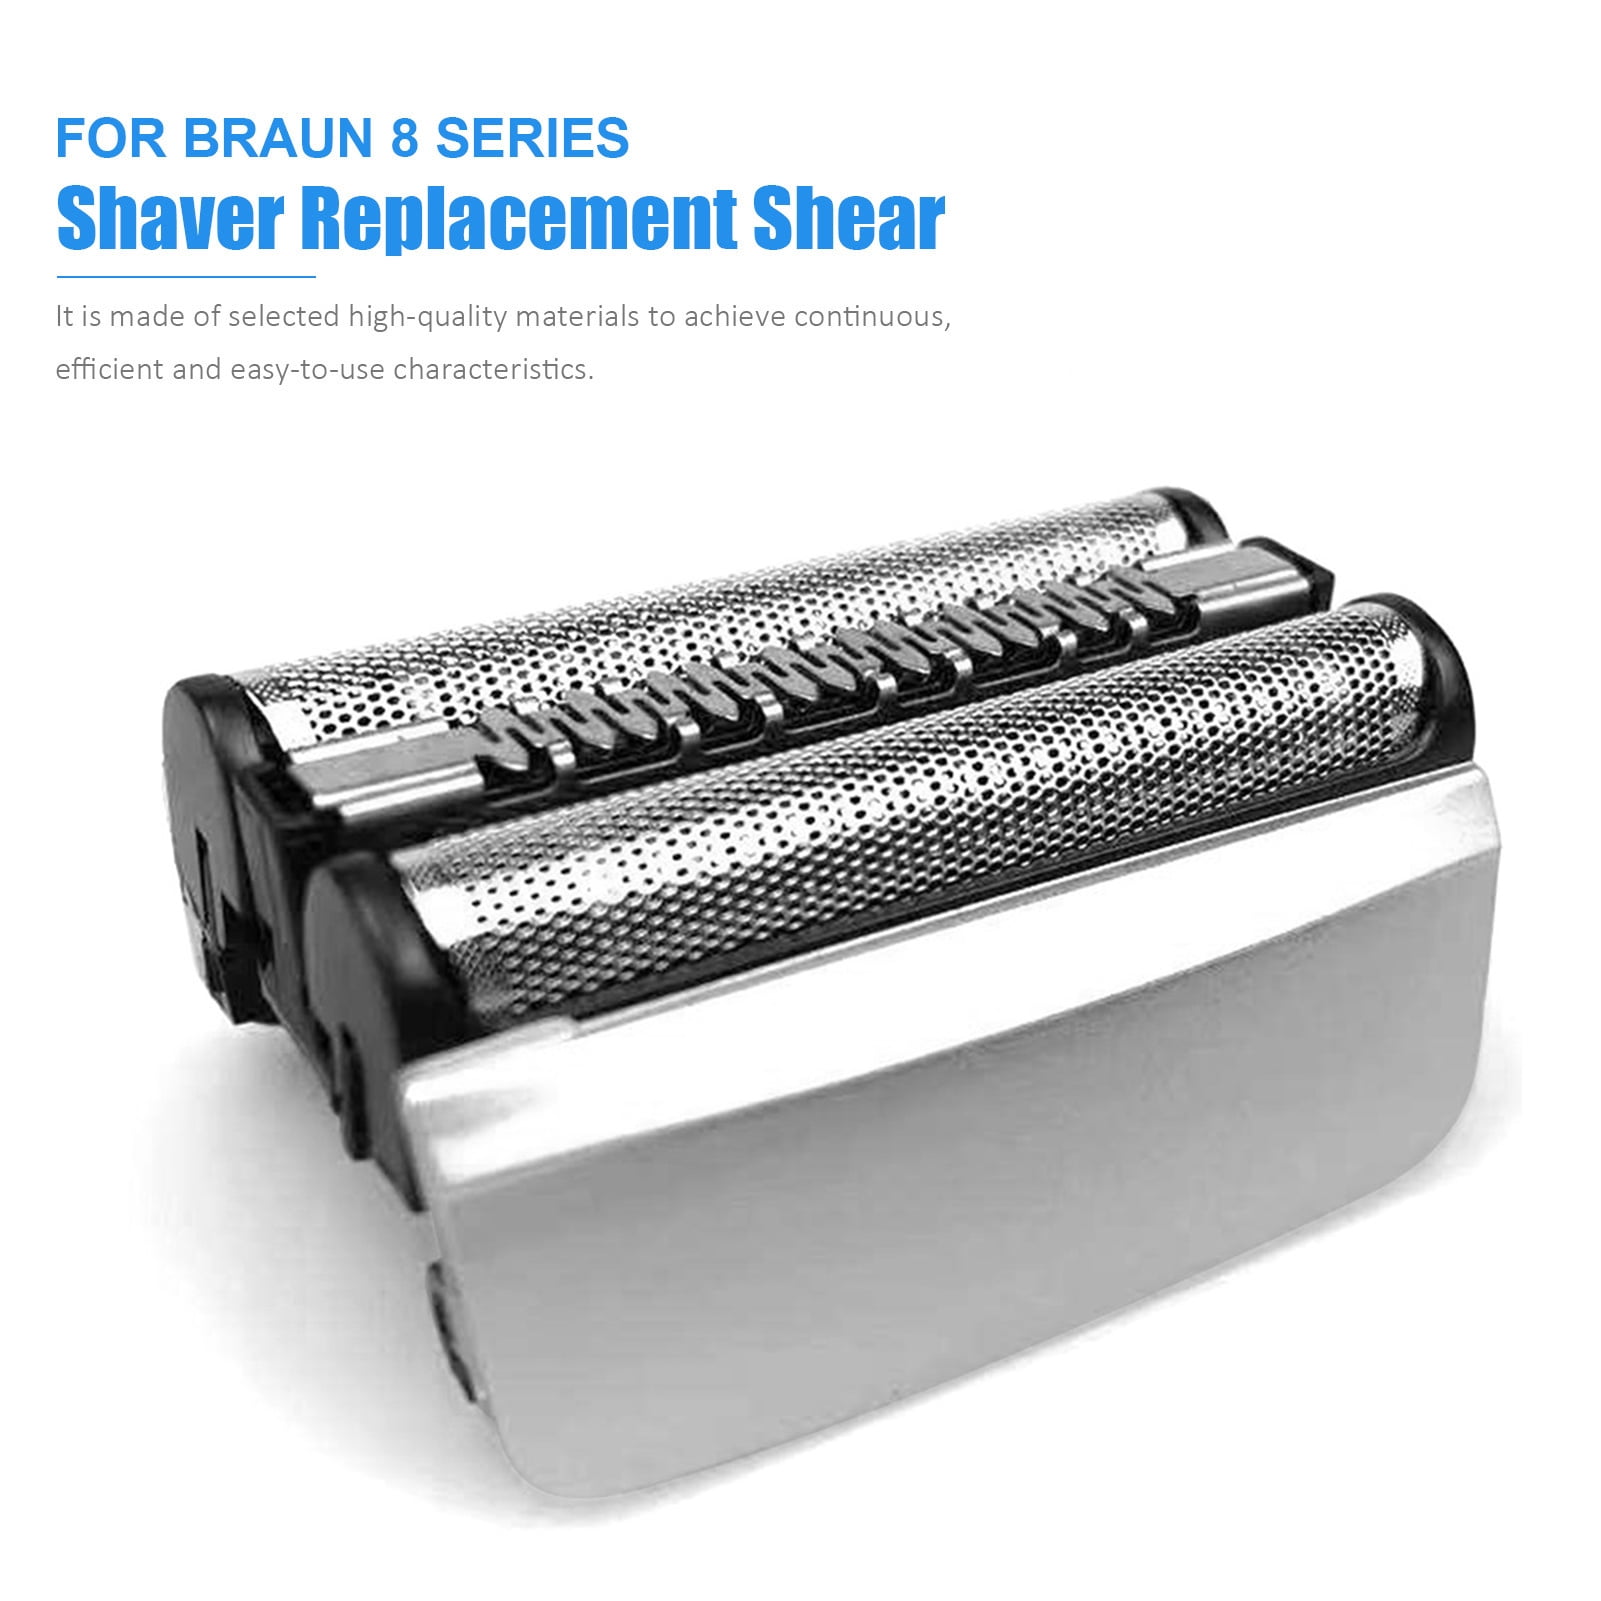 krijgen Vormen sokken Electric Shaver Replacement Shear Replace Head for Braun Series 8 -  Walmart.com